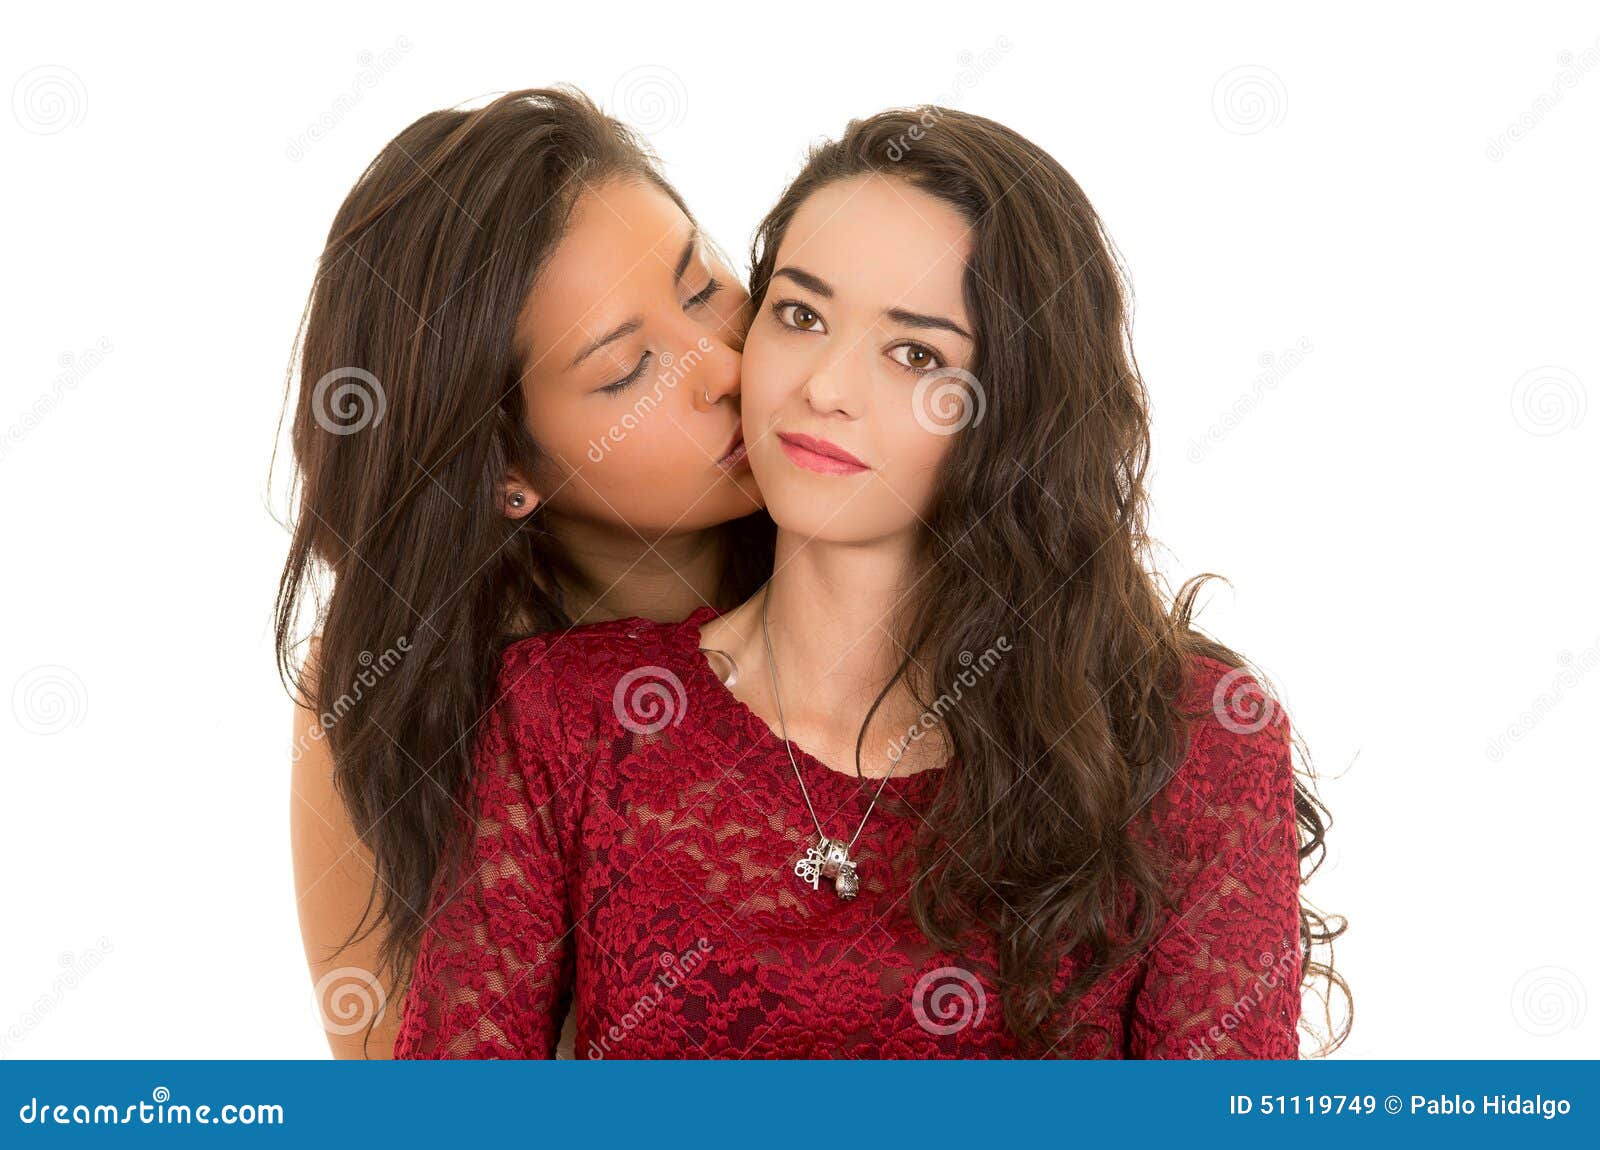 Young Girls Lesbian Kiss